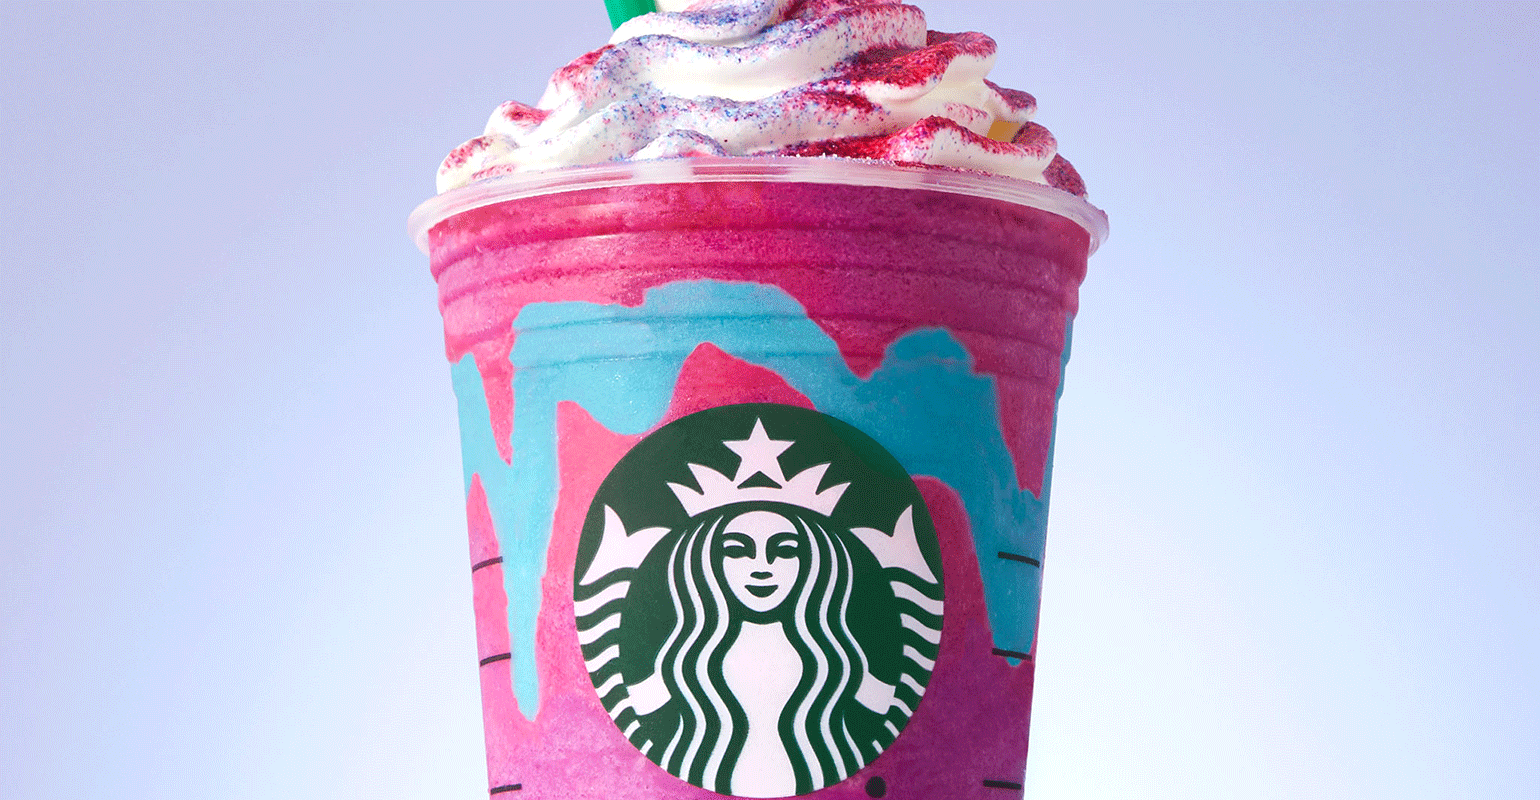 Starbucks targets social-media set with Unicorn Frappuccino